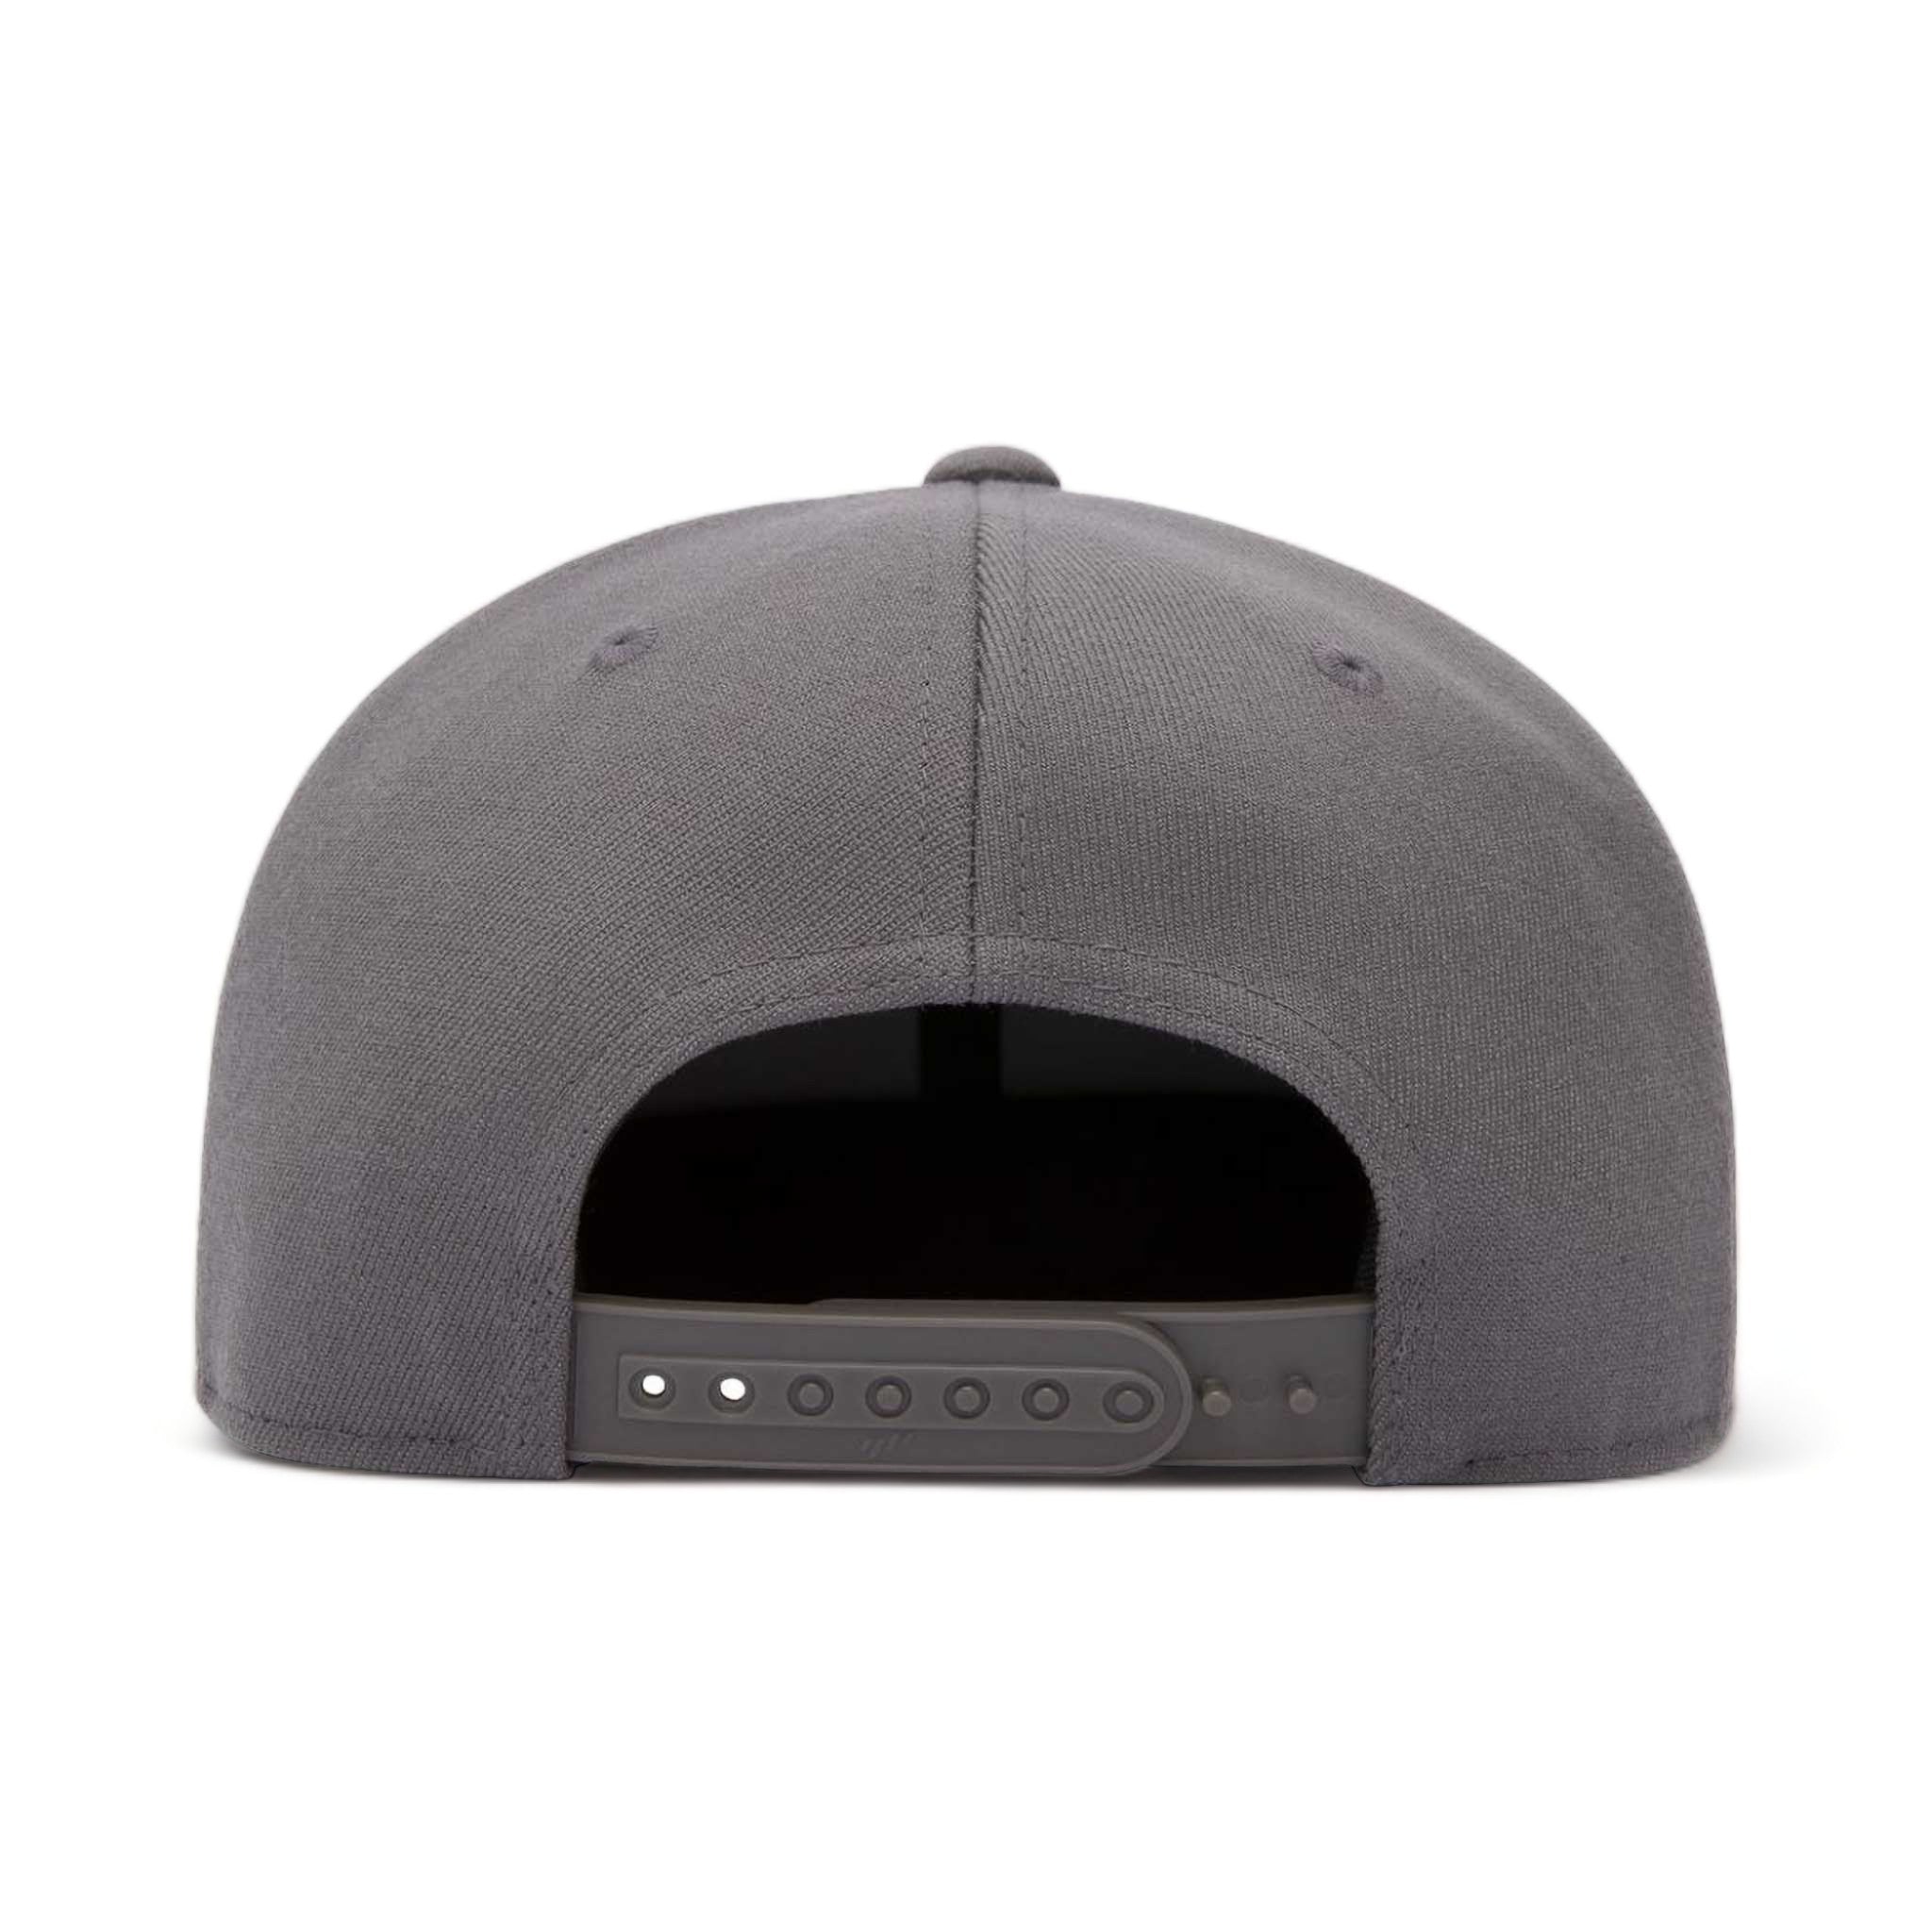 Back view of Flexfit 110F custom hat in grey